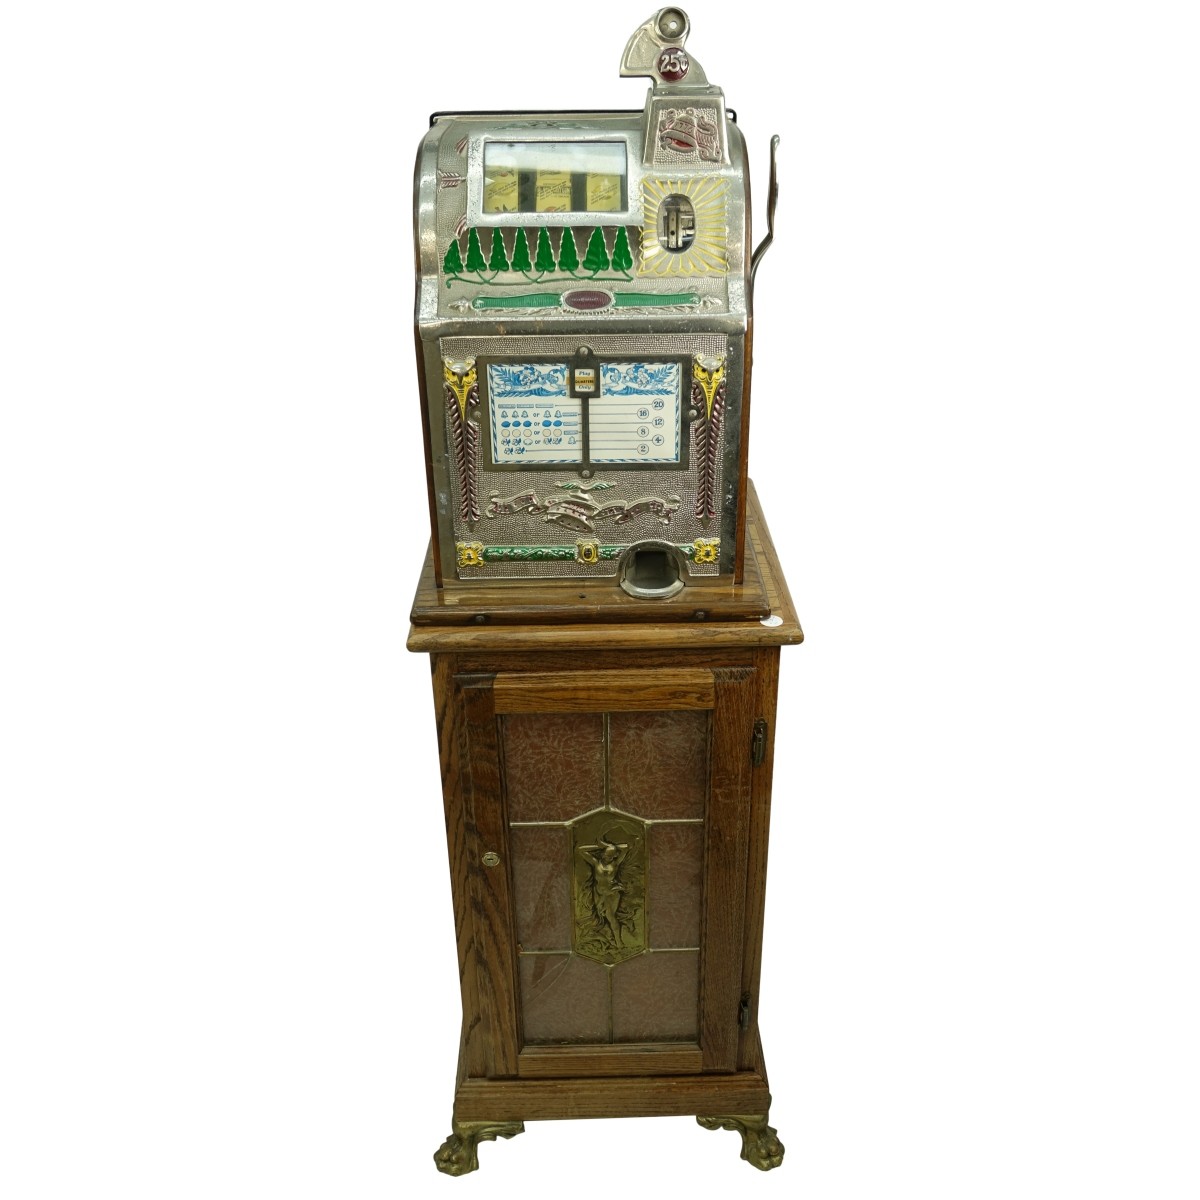 25 Cent Mills Novelty Operators Slot Machine